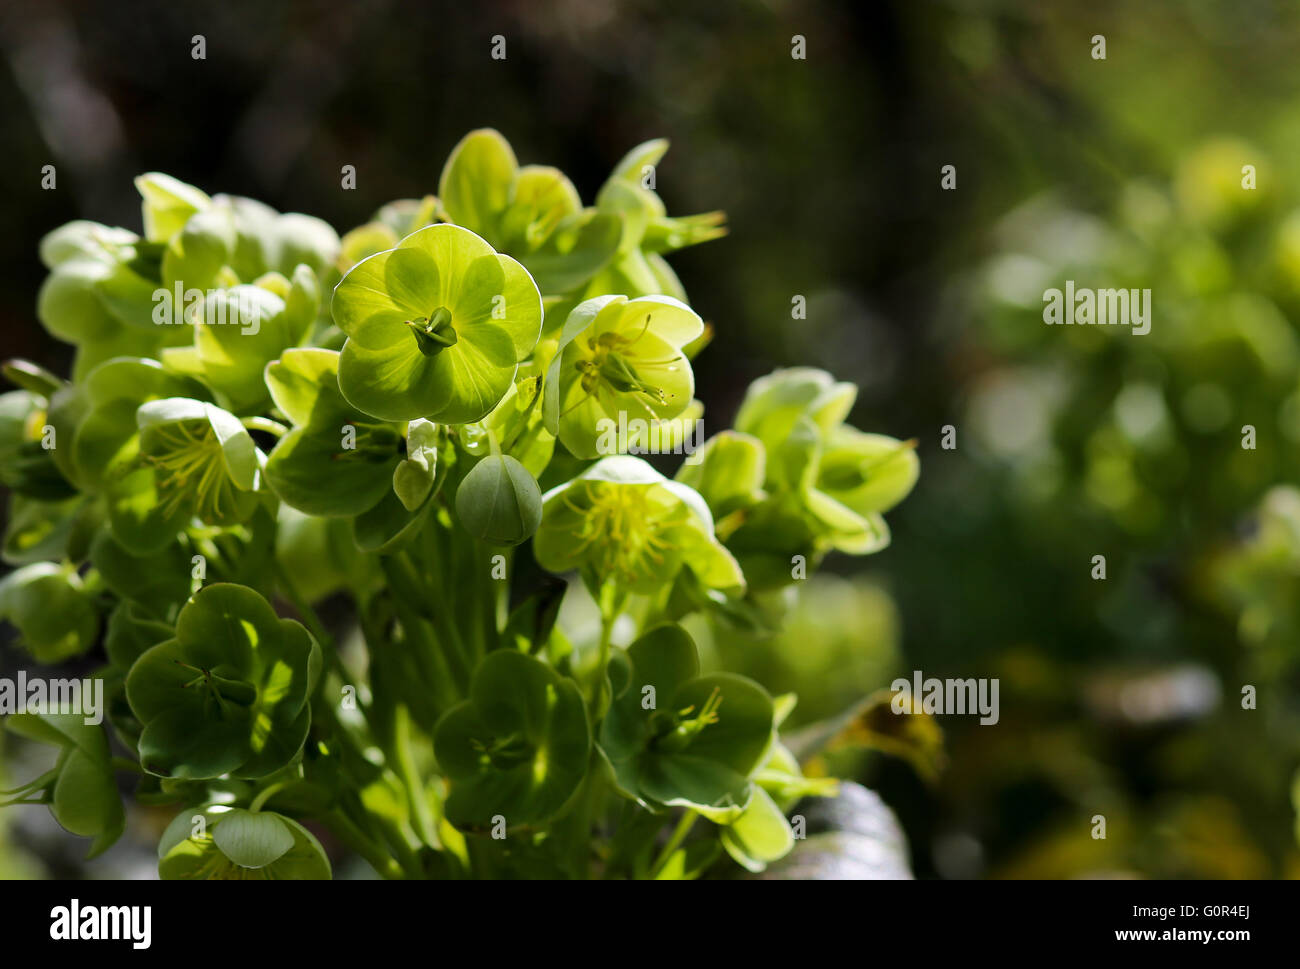 Green Hellebore Helleborus Argutifolius Flower Heads, blooming on blurred green background Stock Photo